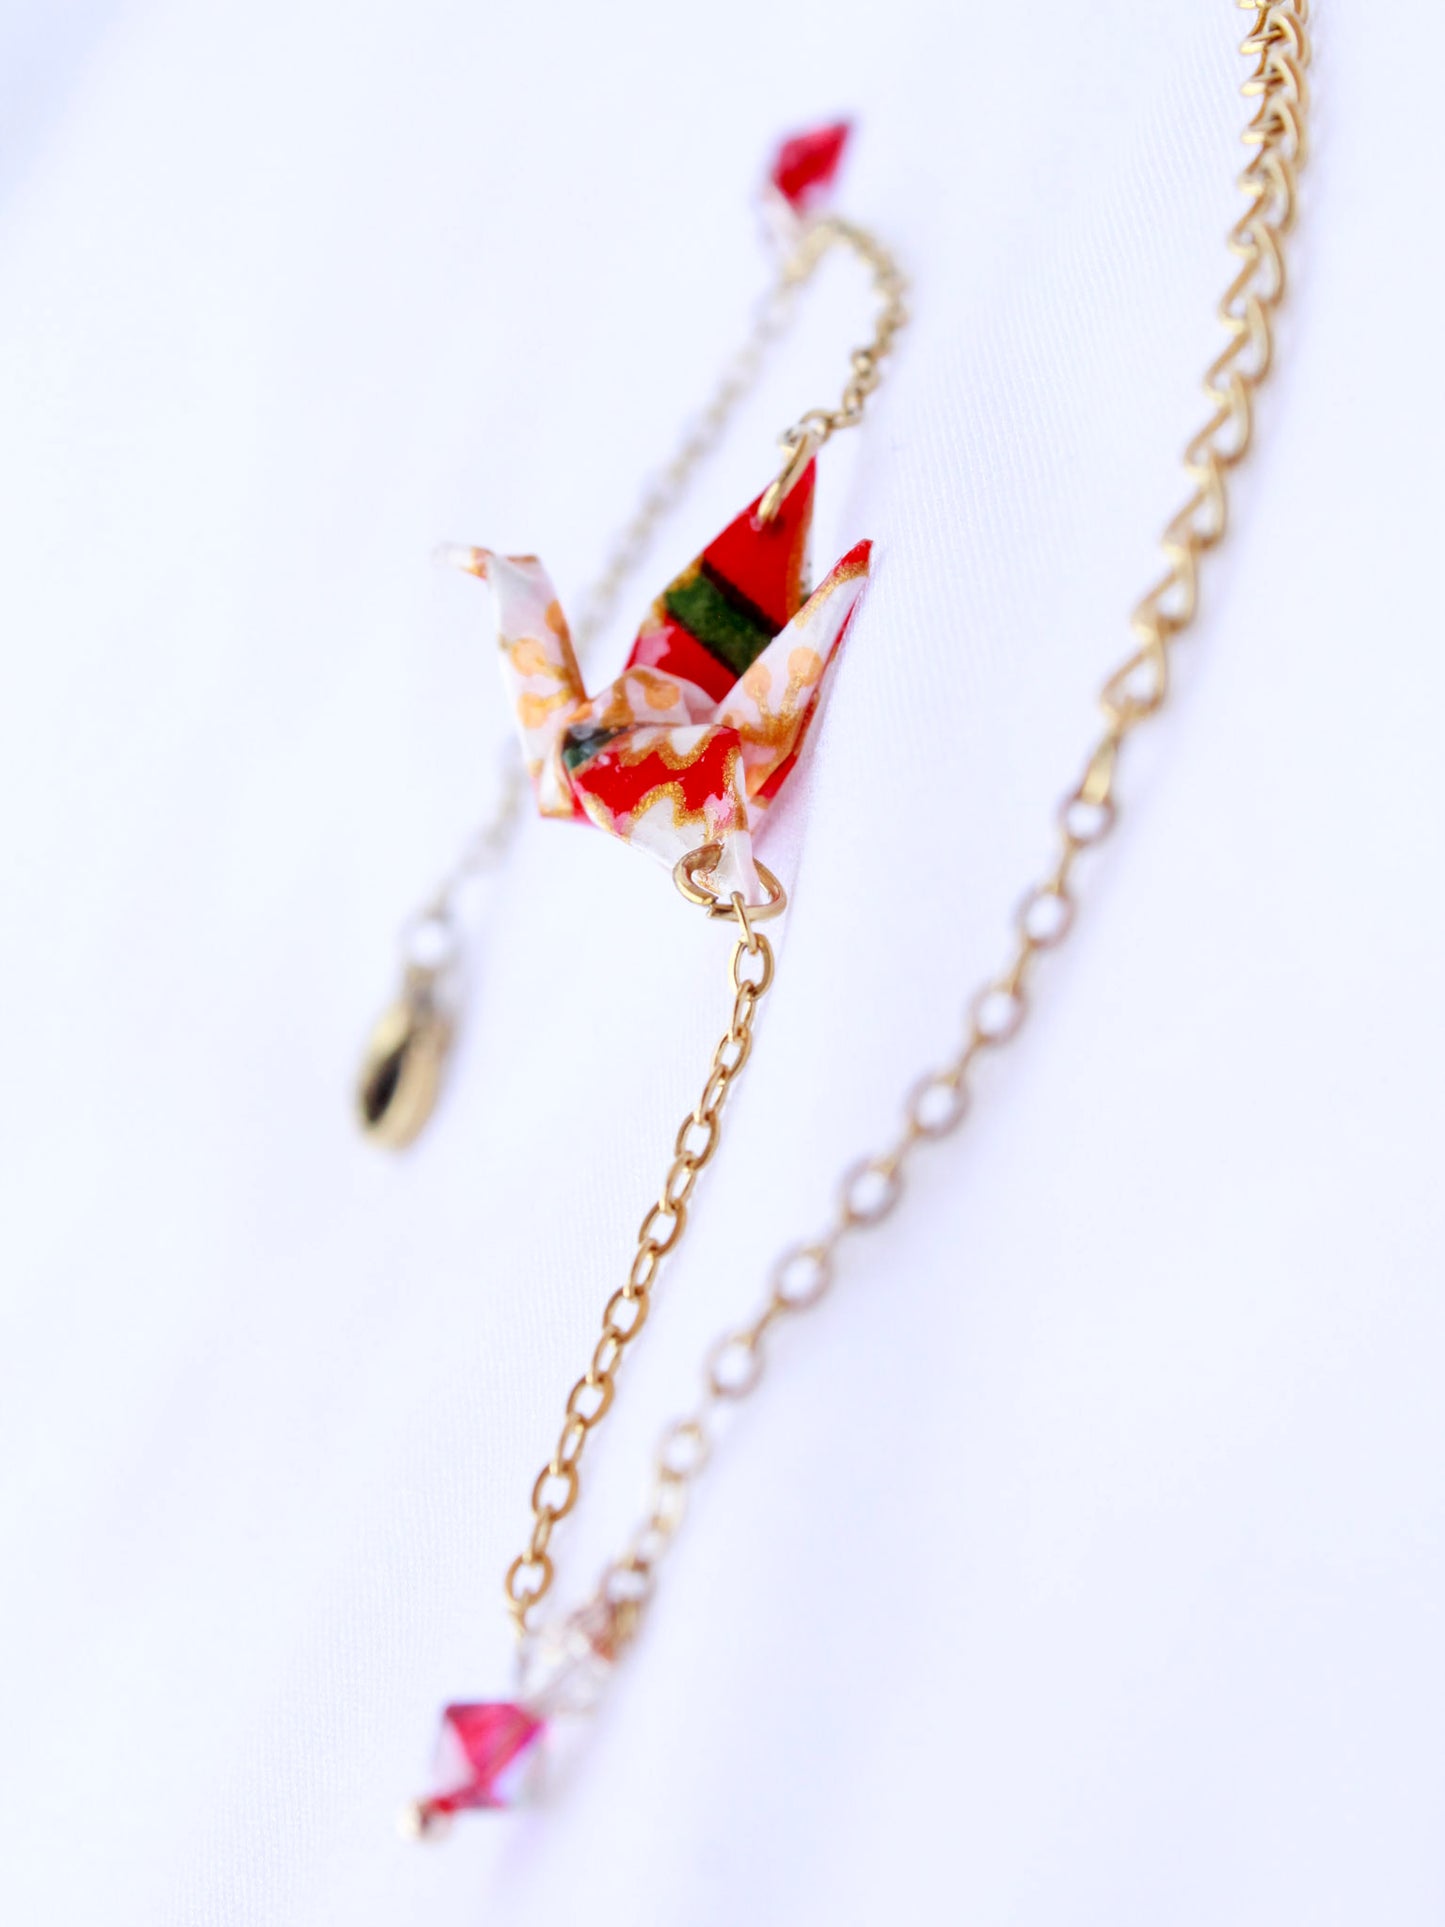 Origami Bracelet - Paper Crane, Rose Gold, Swarovski Crystals